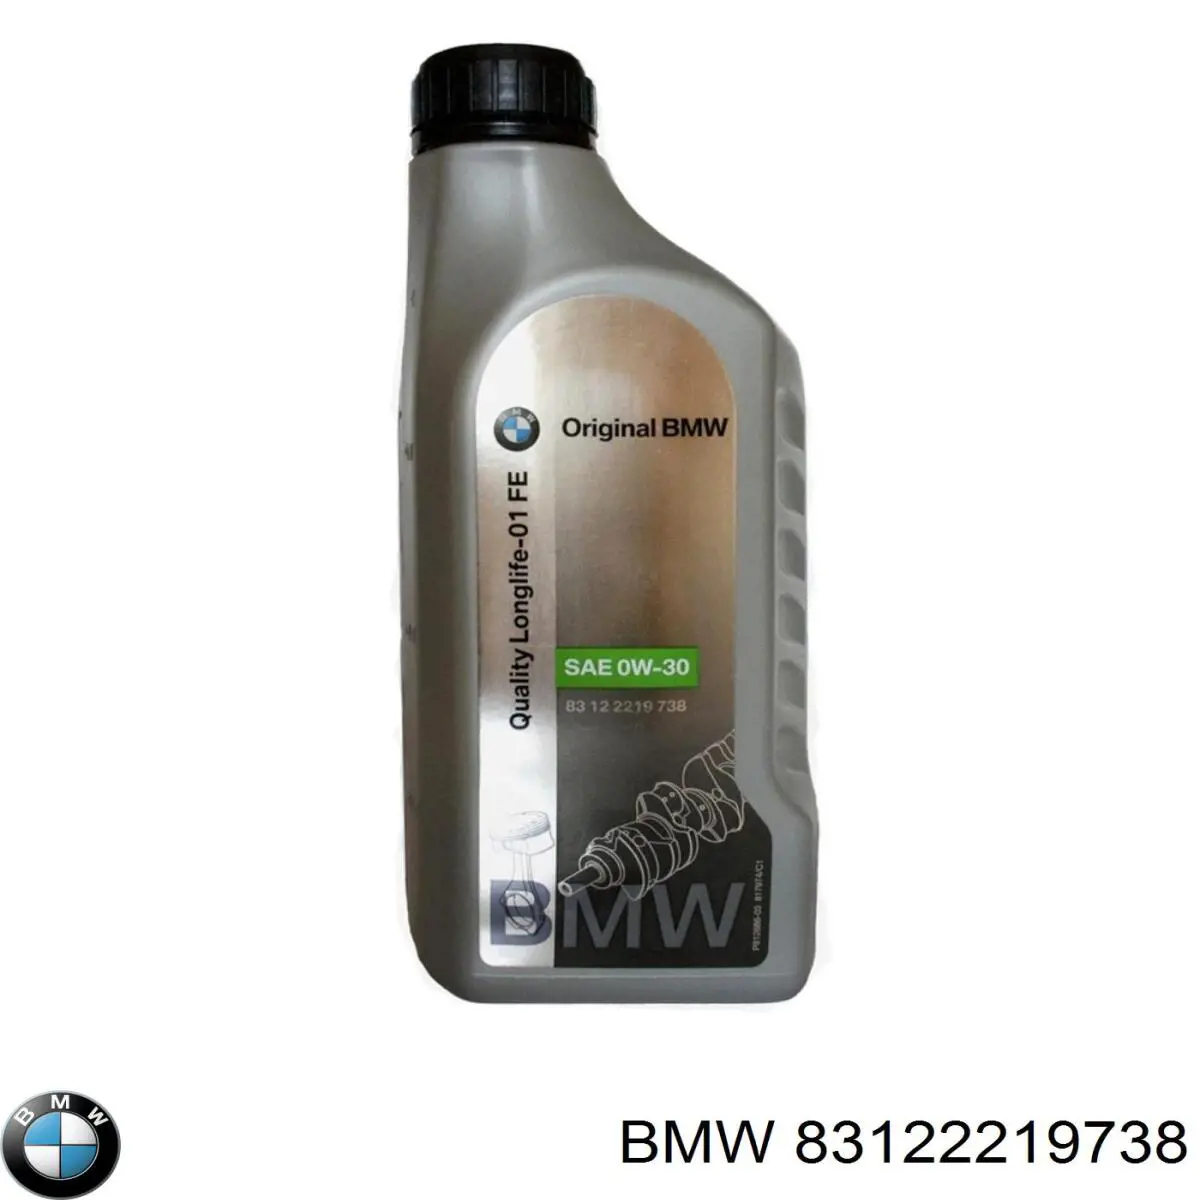 Моторное масло BMW Longlife-01 FE 0W-30 Синтетическое 1л (83122219738)